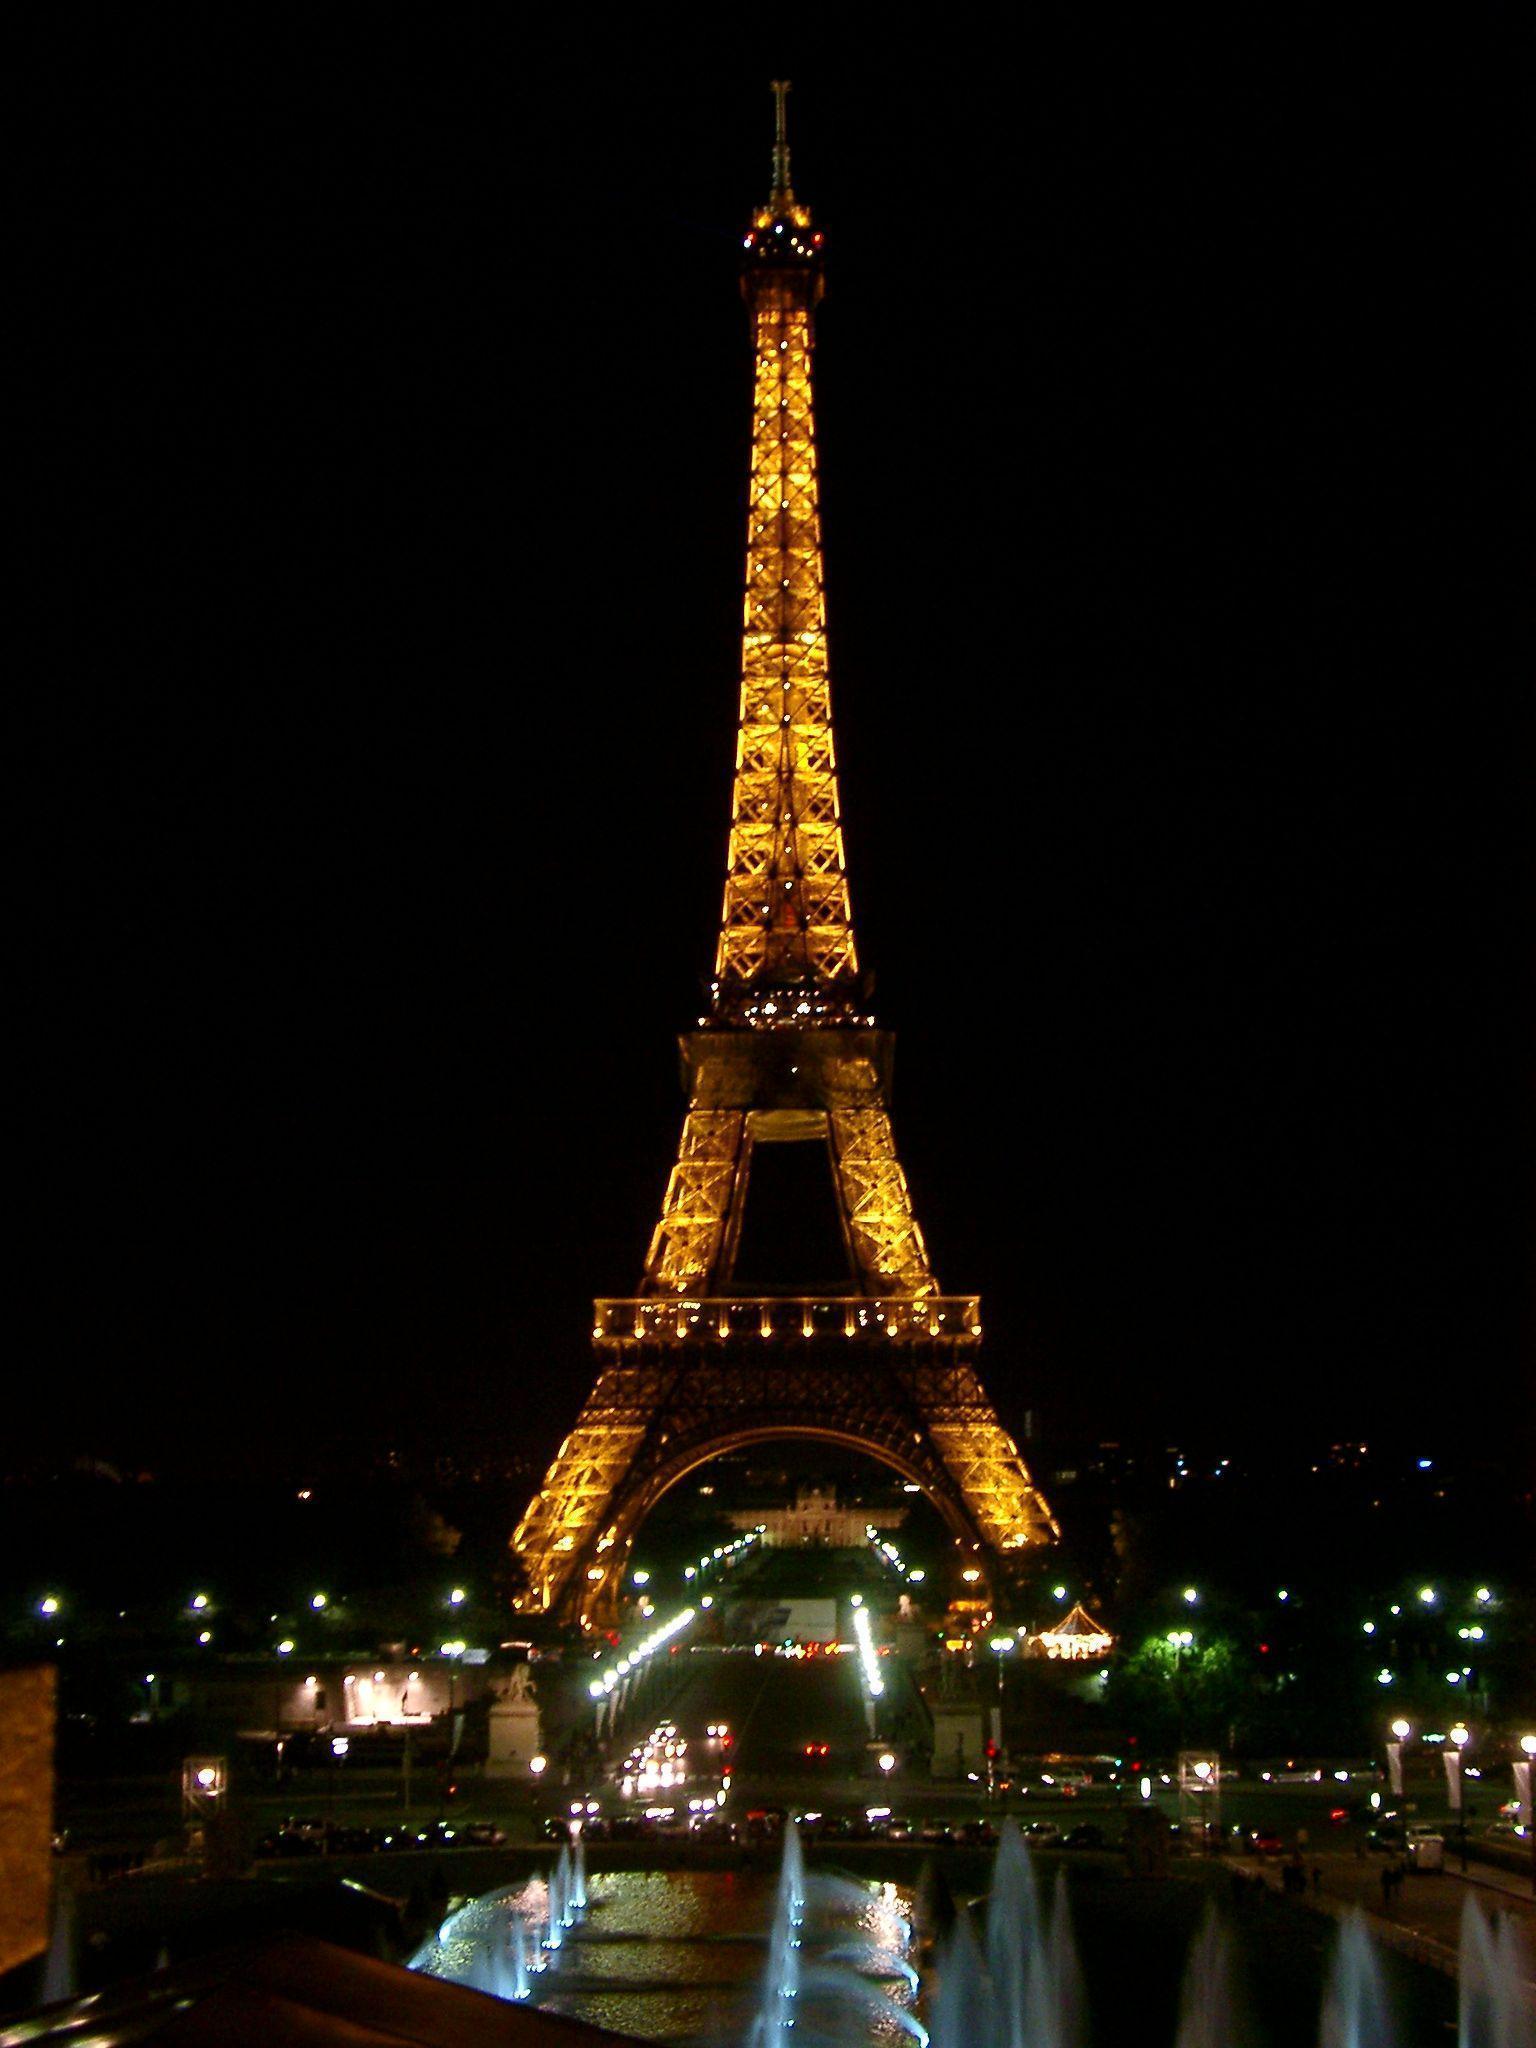 Cute Eiffel Tower Wallpaper